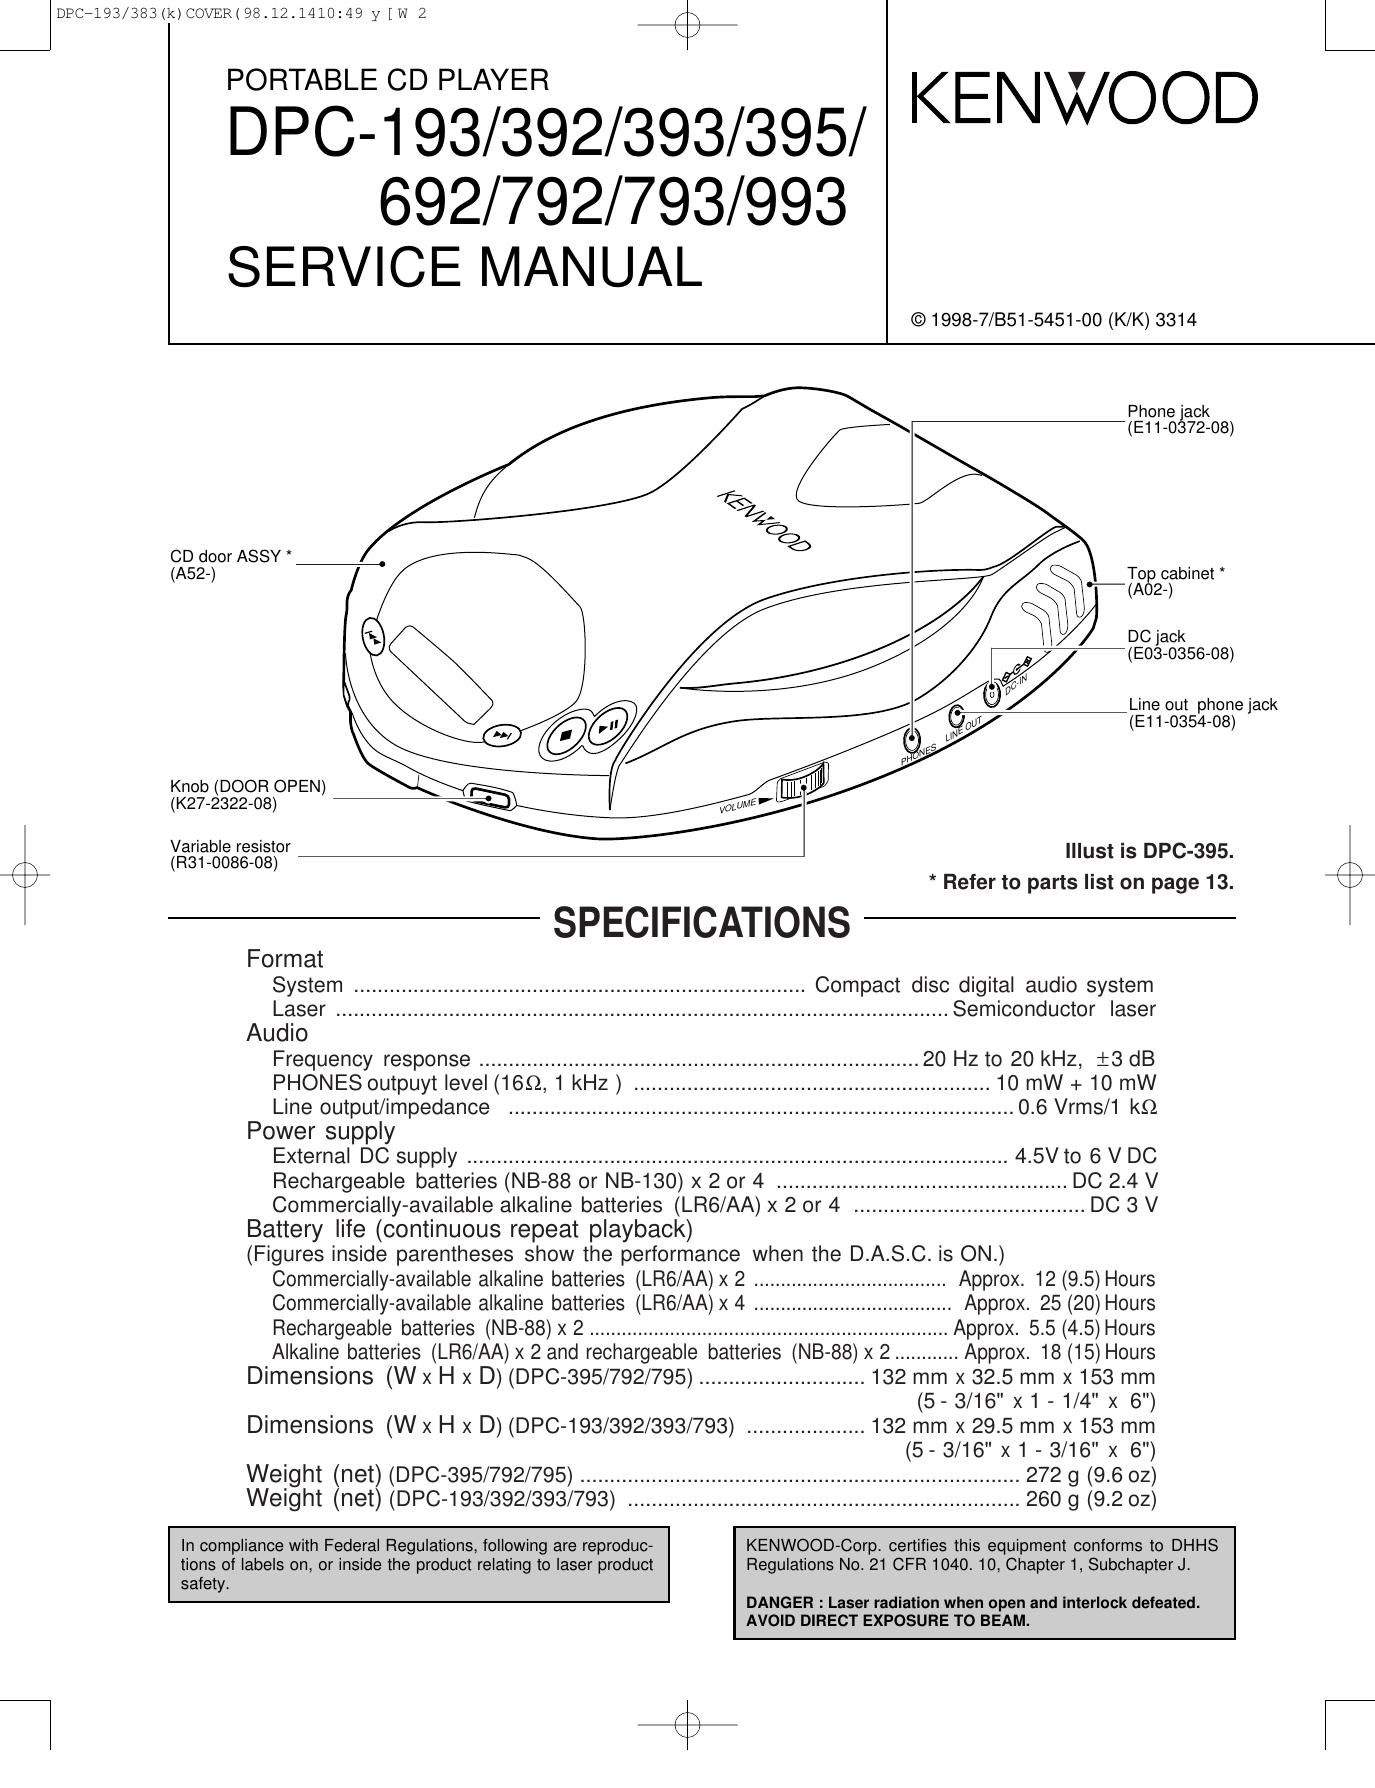 Kenwood DPC 193 Service Manual